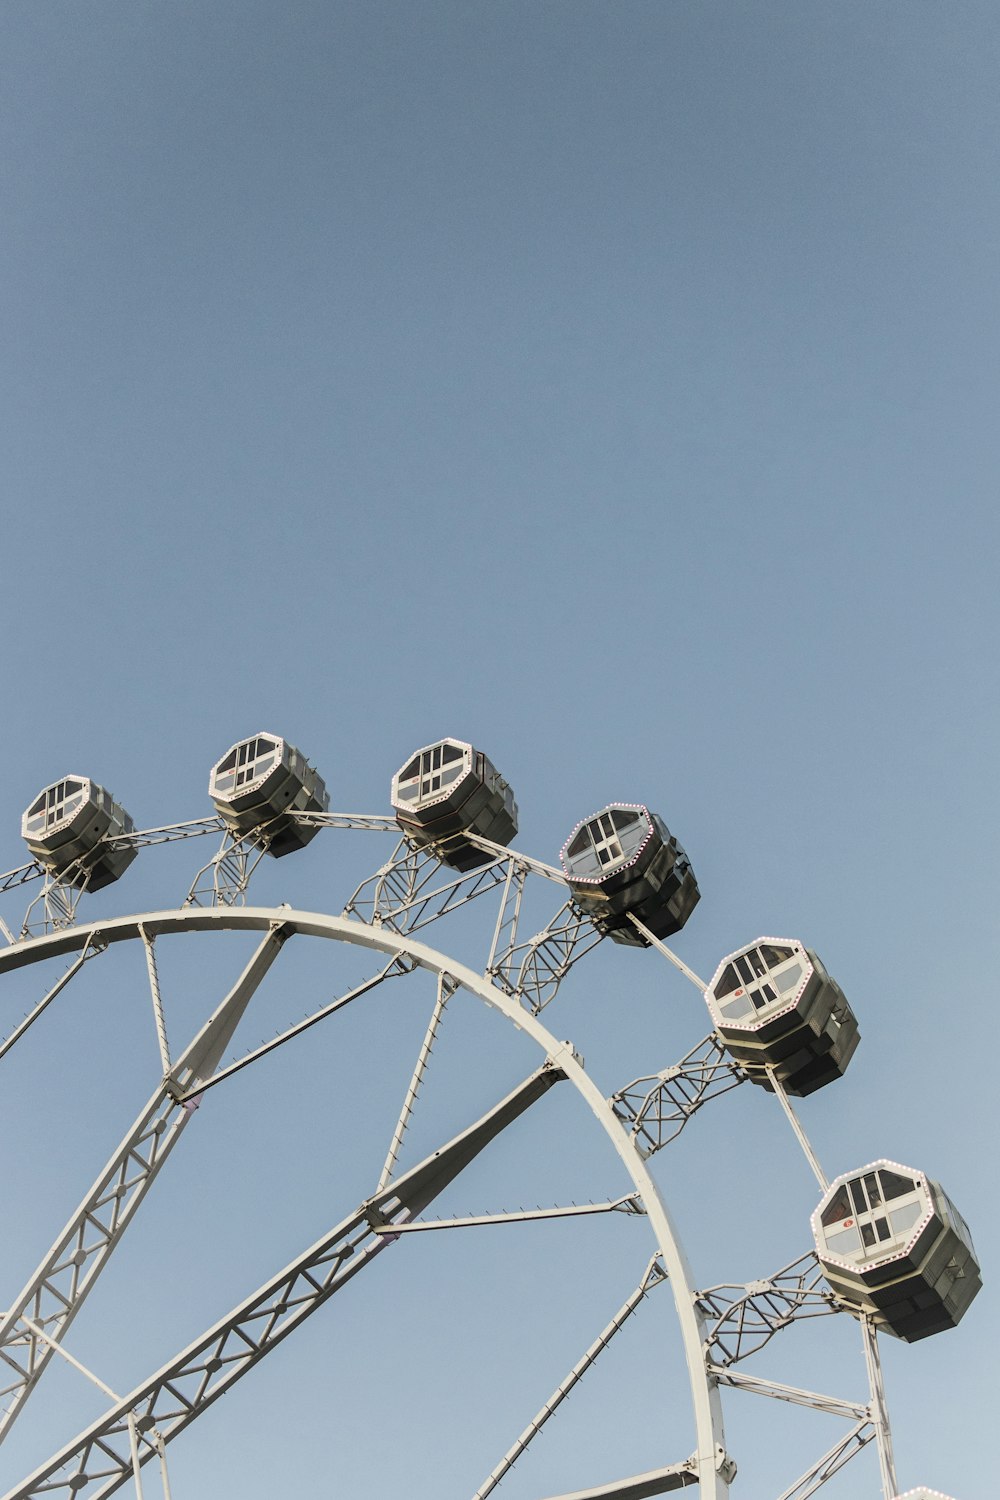 white ferris wheel under blue sky during daytime